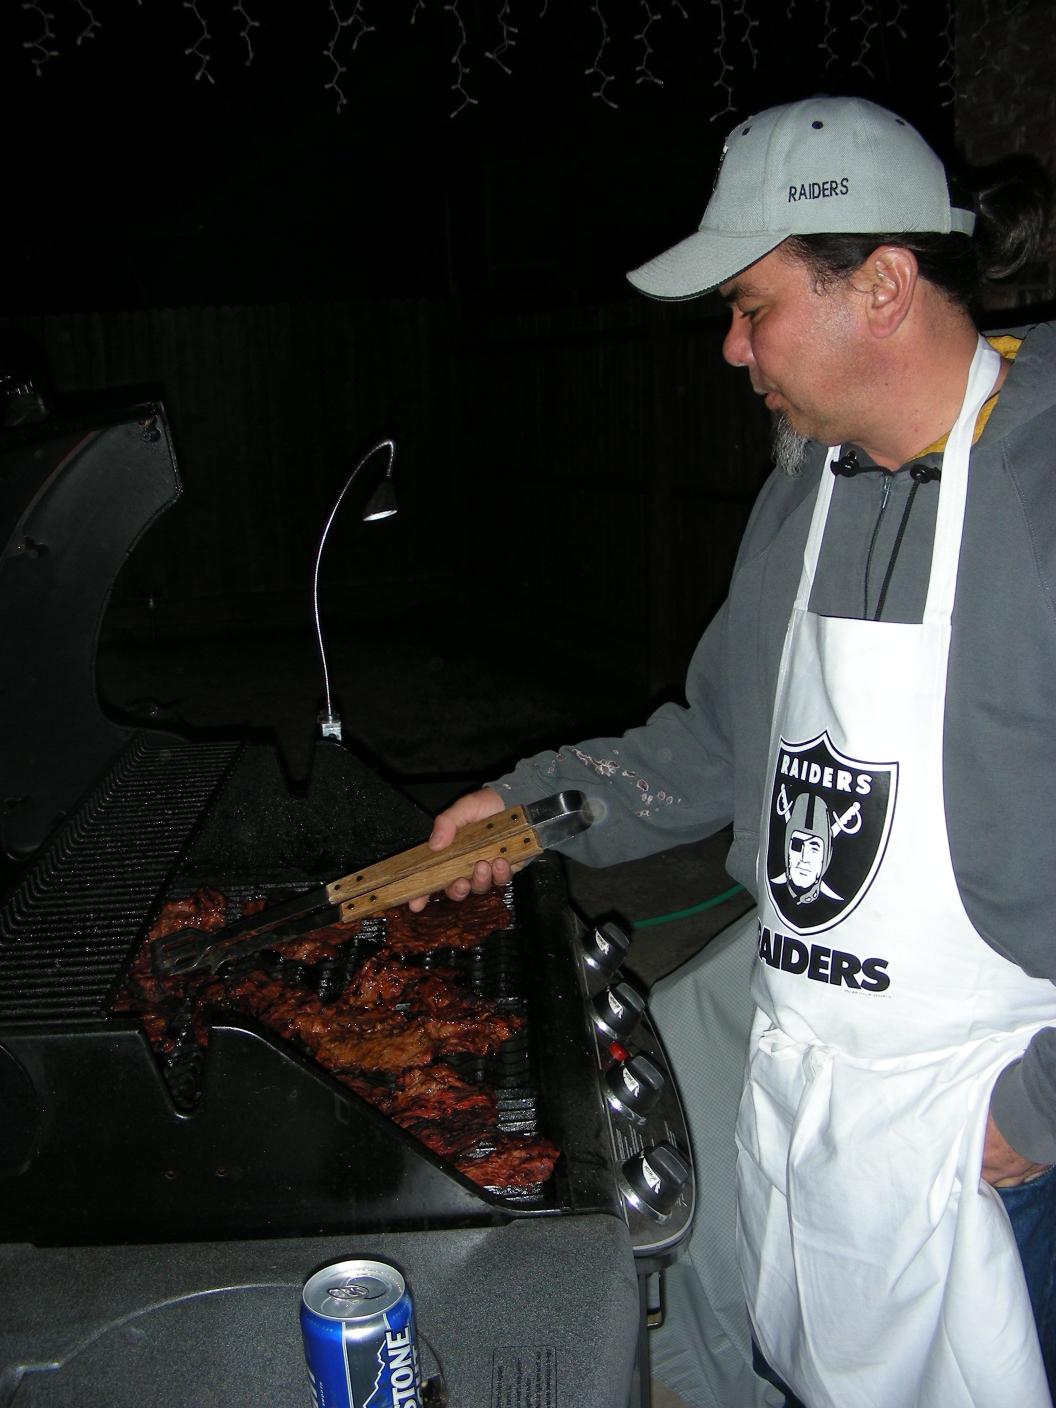 Greg grilling the carne asada